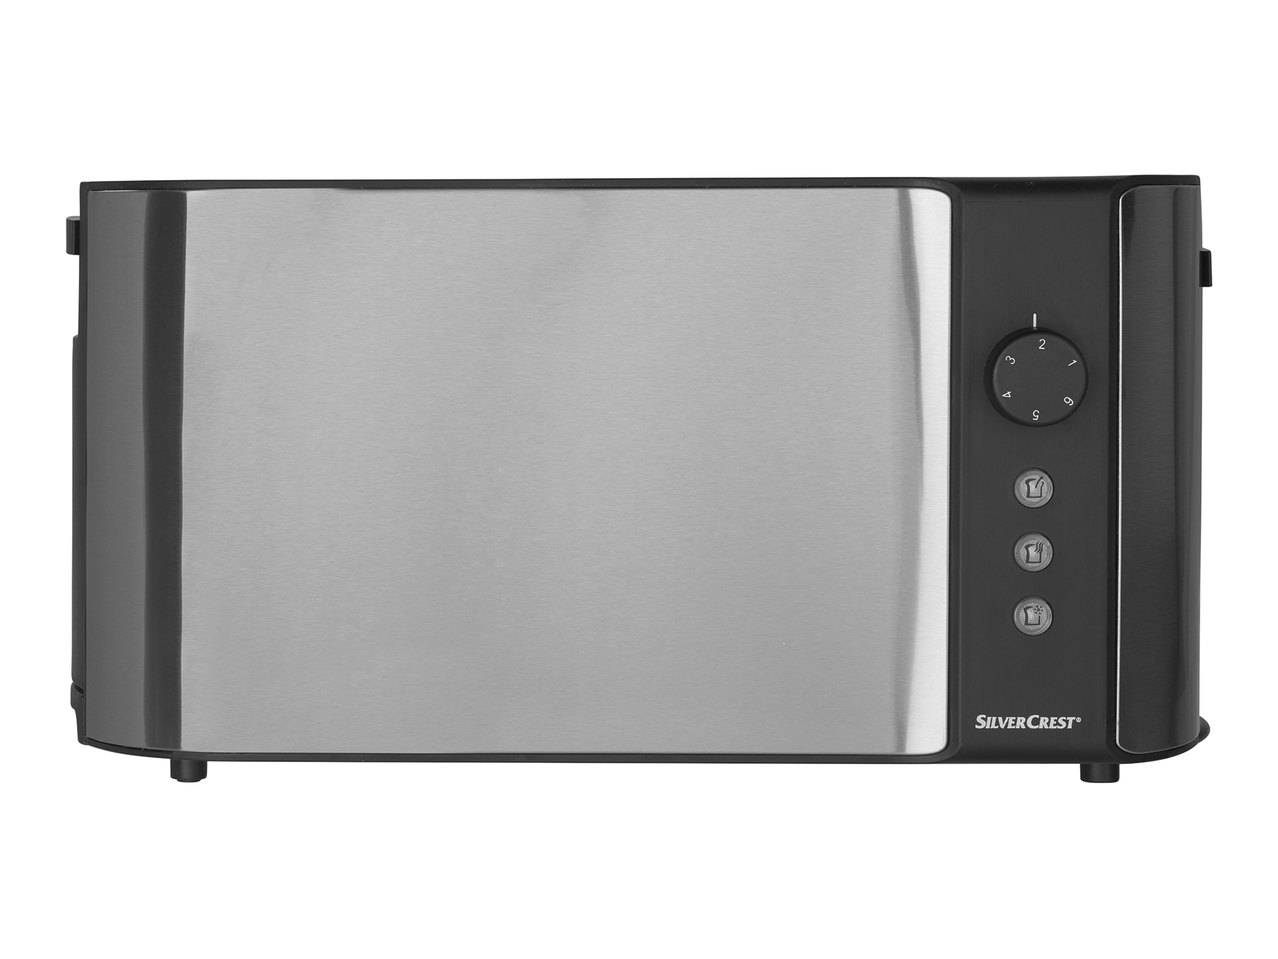 Silvercrest Double Long-Slot Toaster1